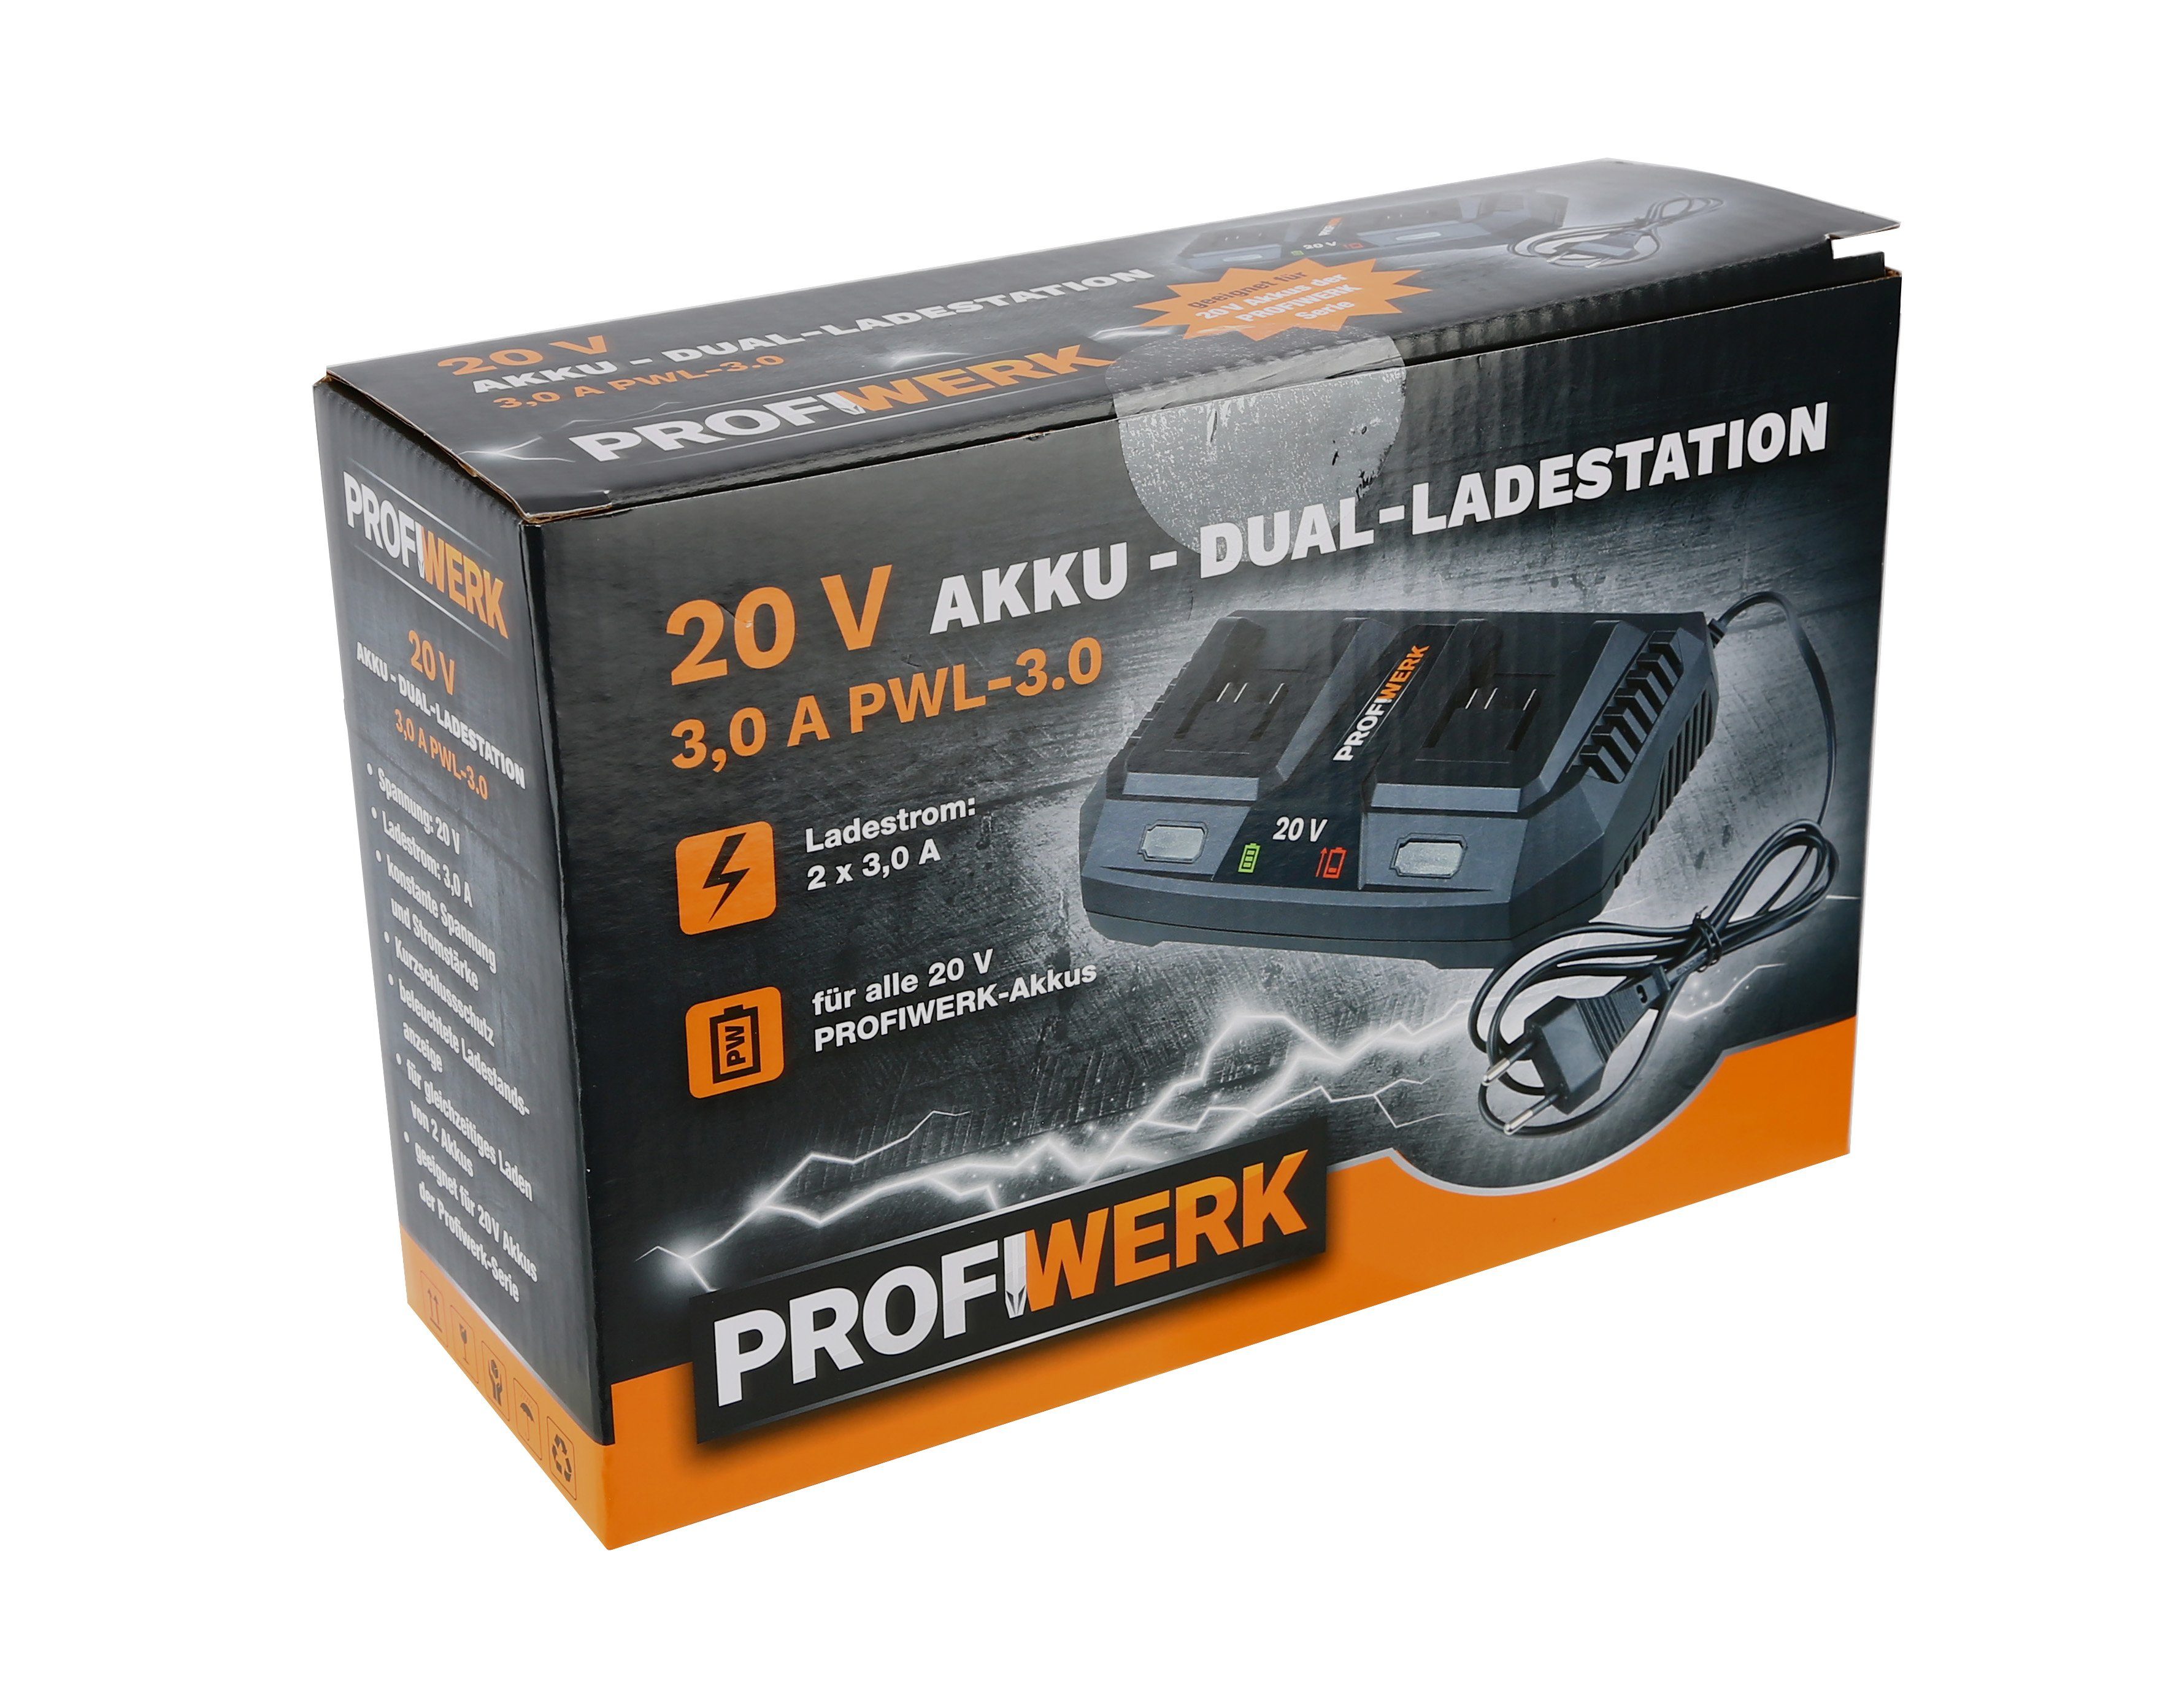 Profiwerk Dual-Ladestation 20V, Werkzeug-Akku-Ladetechnik PWL-3.0 3,0A